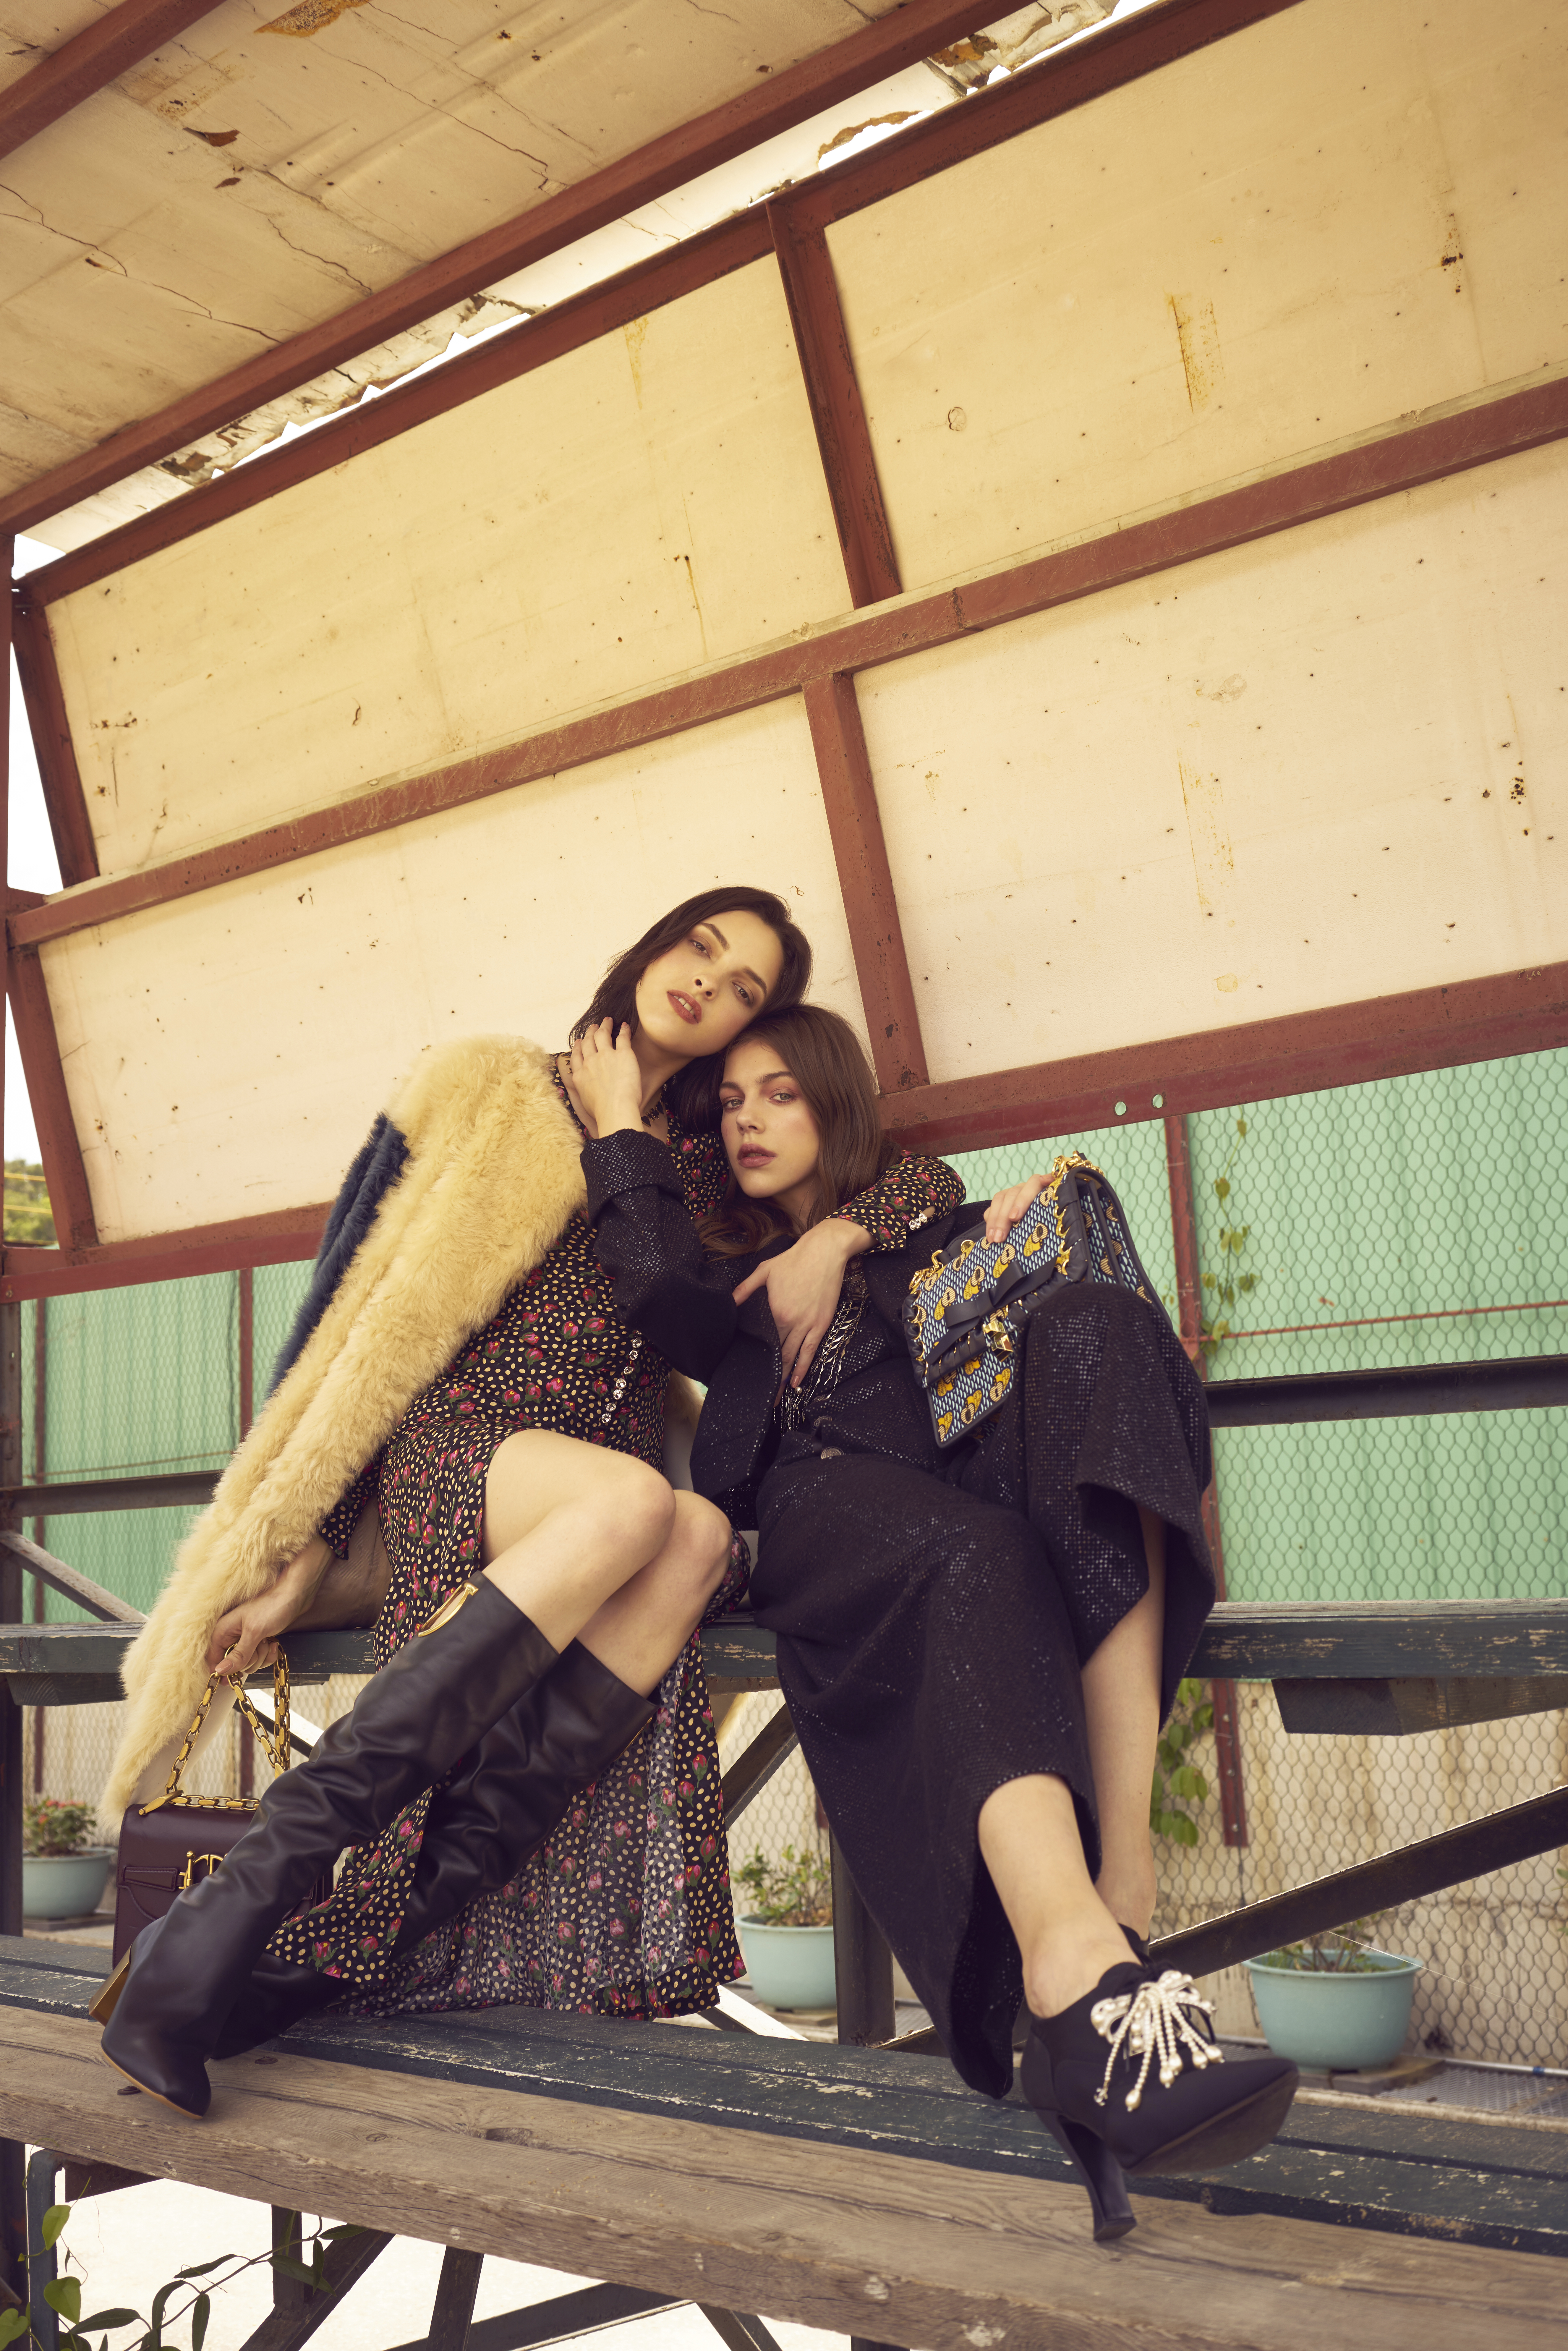 On Clarice (left): Dress_Miu Miu Coat_Bally Shoes_Salvatore Ferragamo Bag_Dior. On Amelia (right): Outfit_Chanel Bag_Fendi